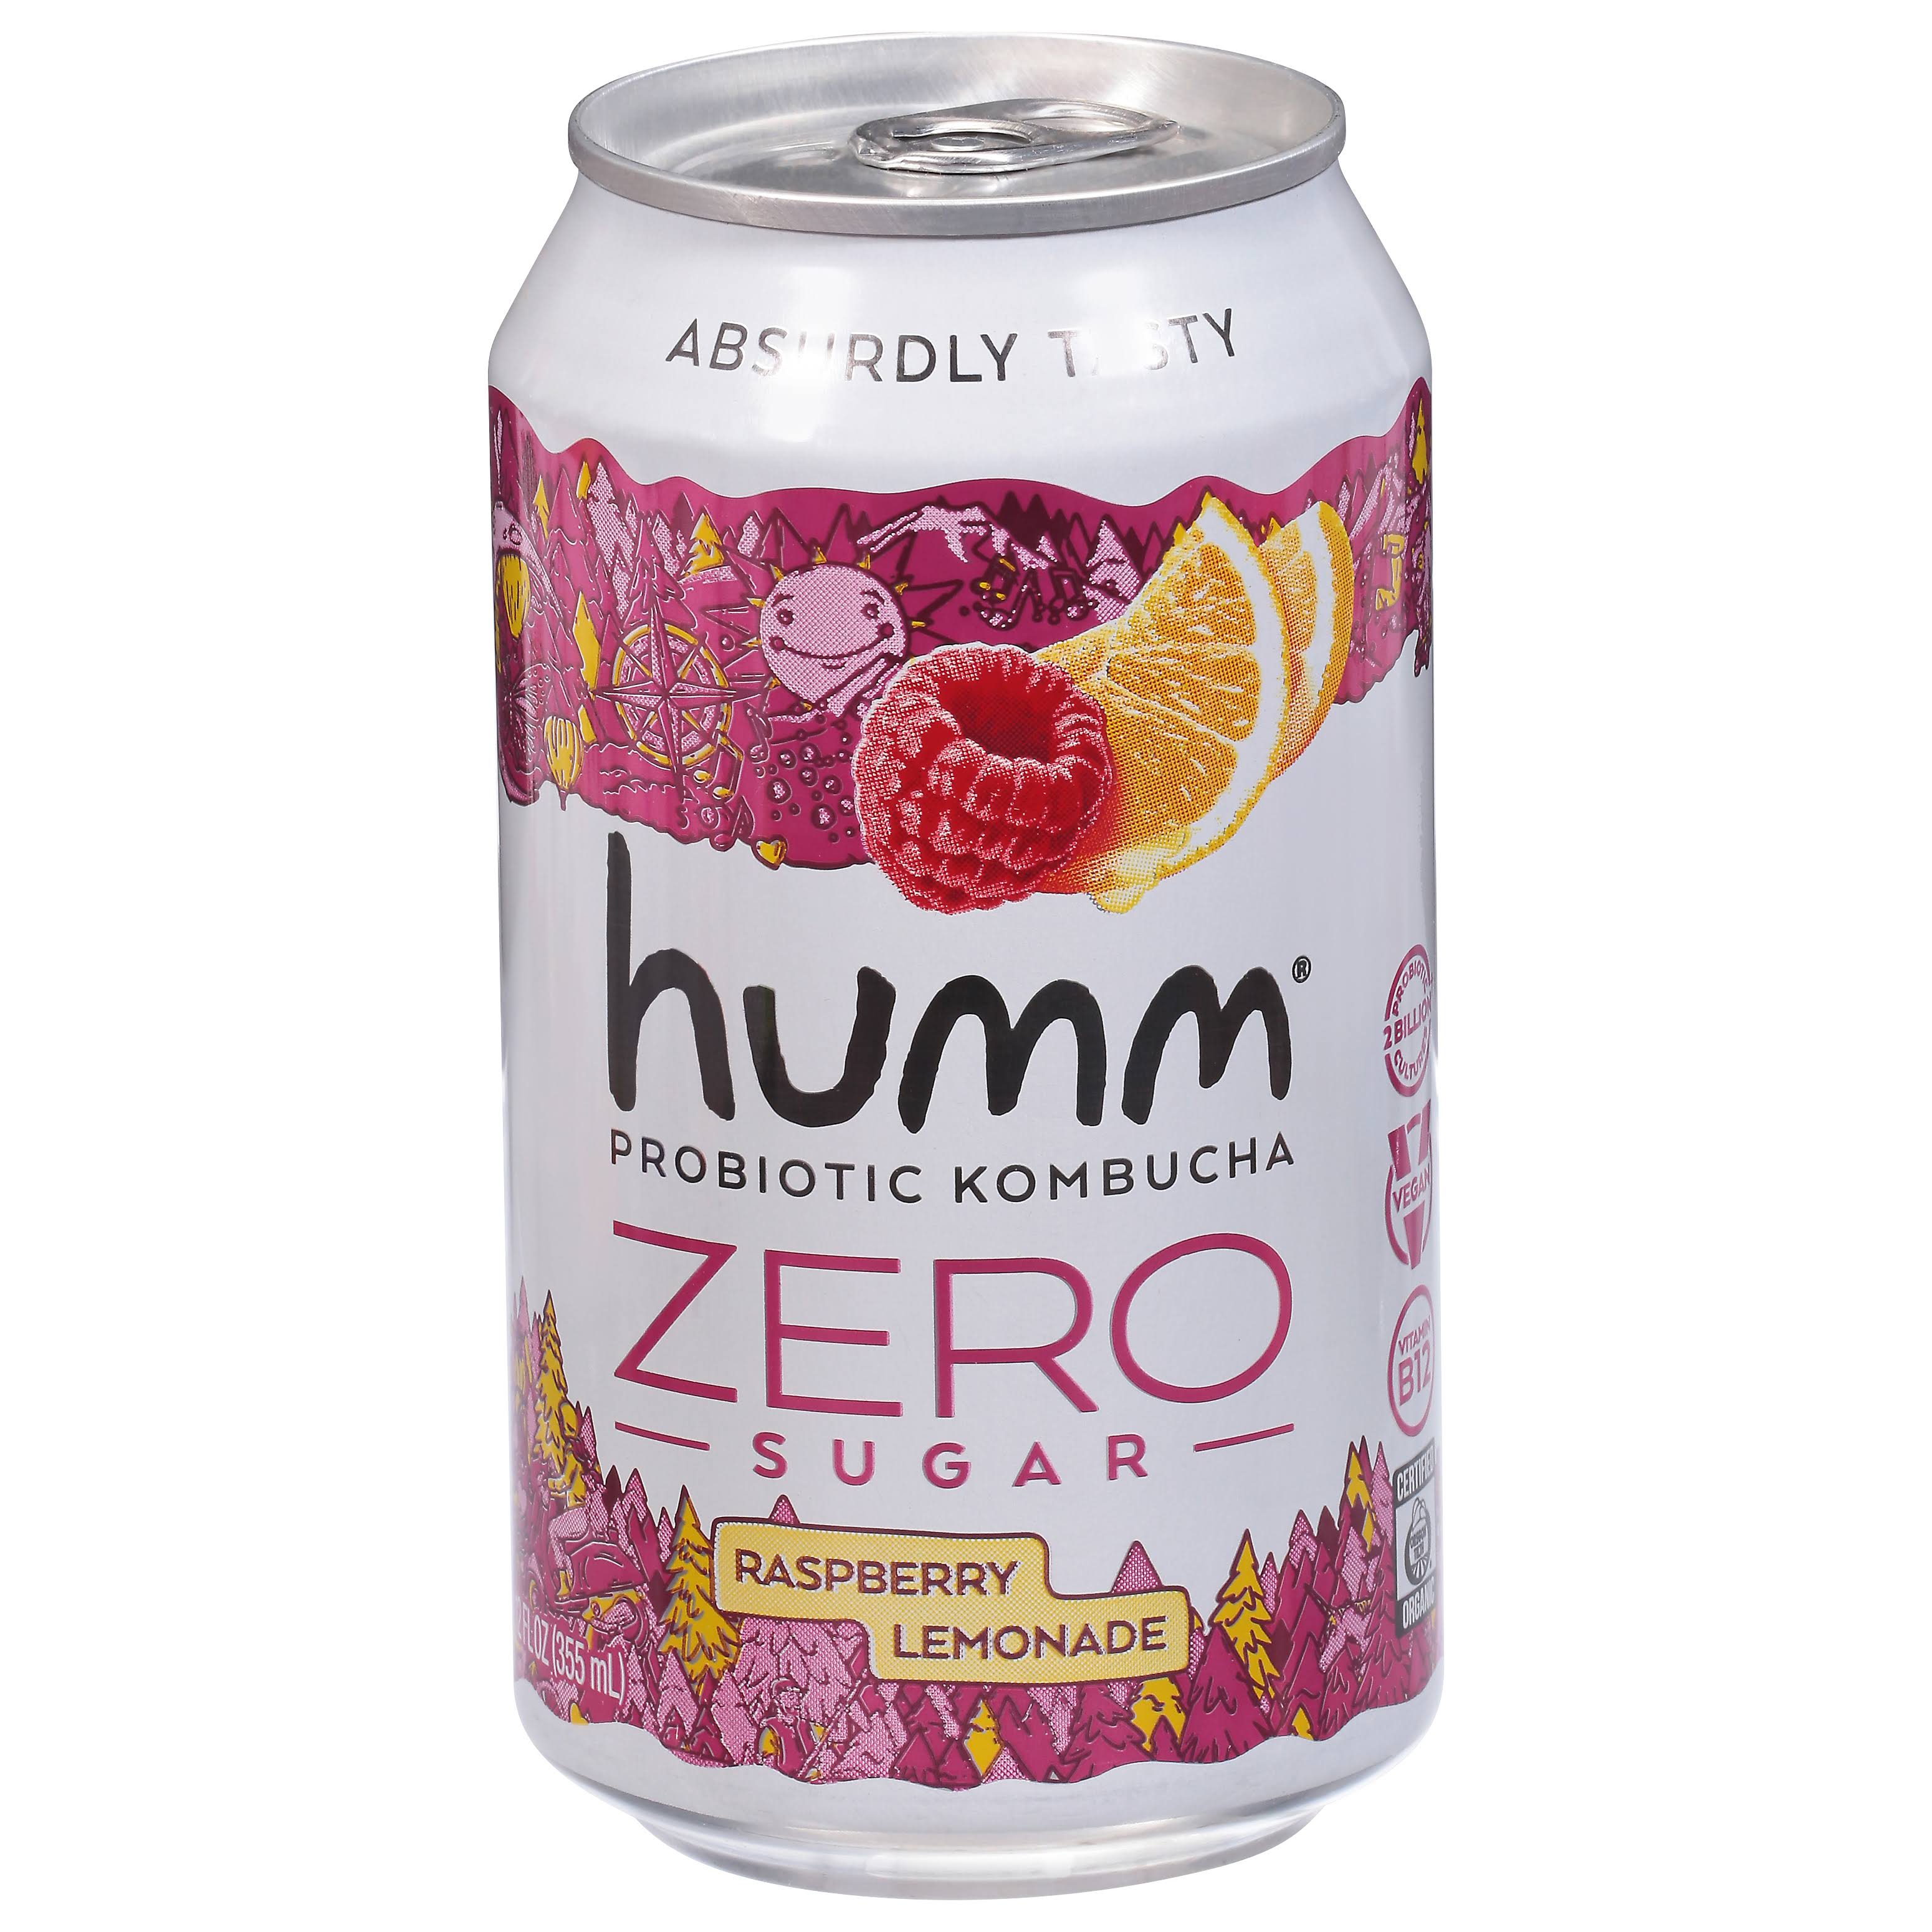 Humm Zero Sugar Raspberry Lemonade Probiotic Kombucha (12 fl oz)